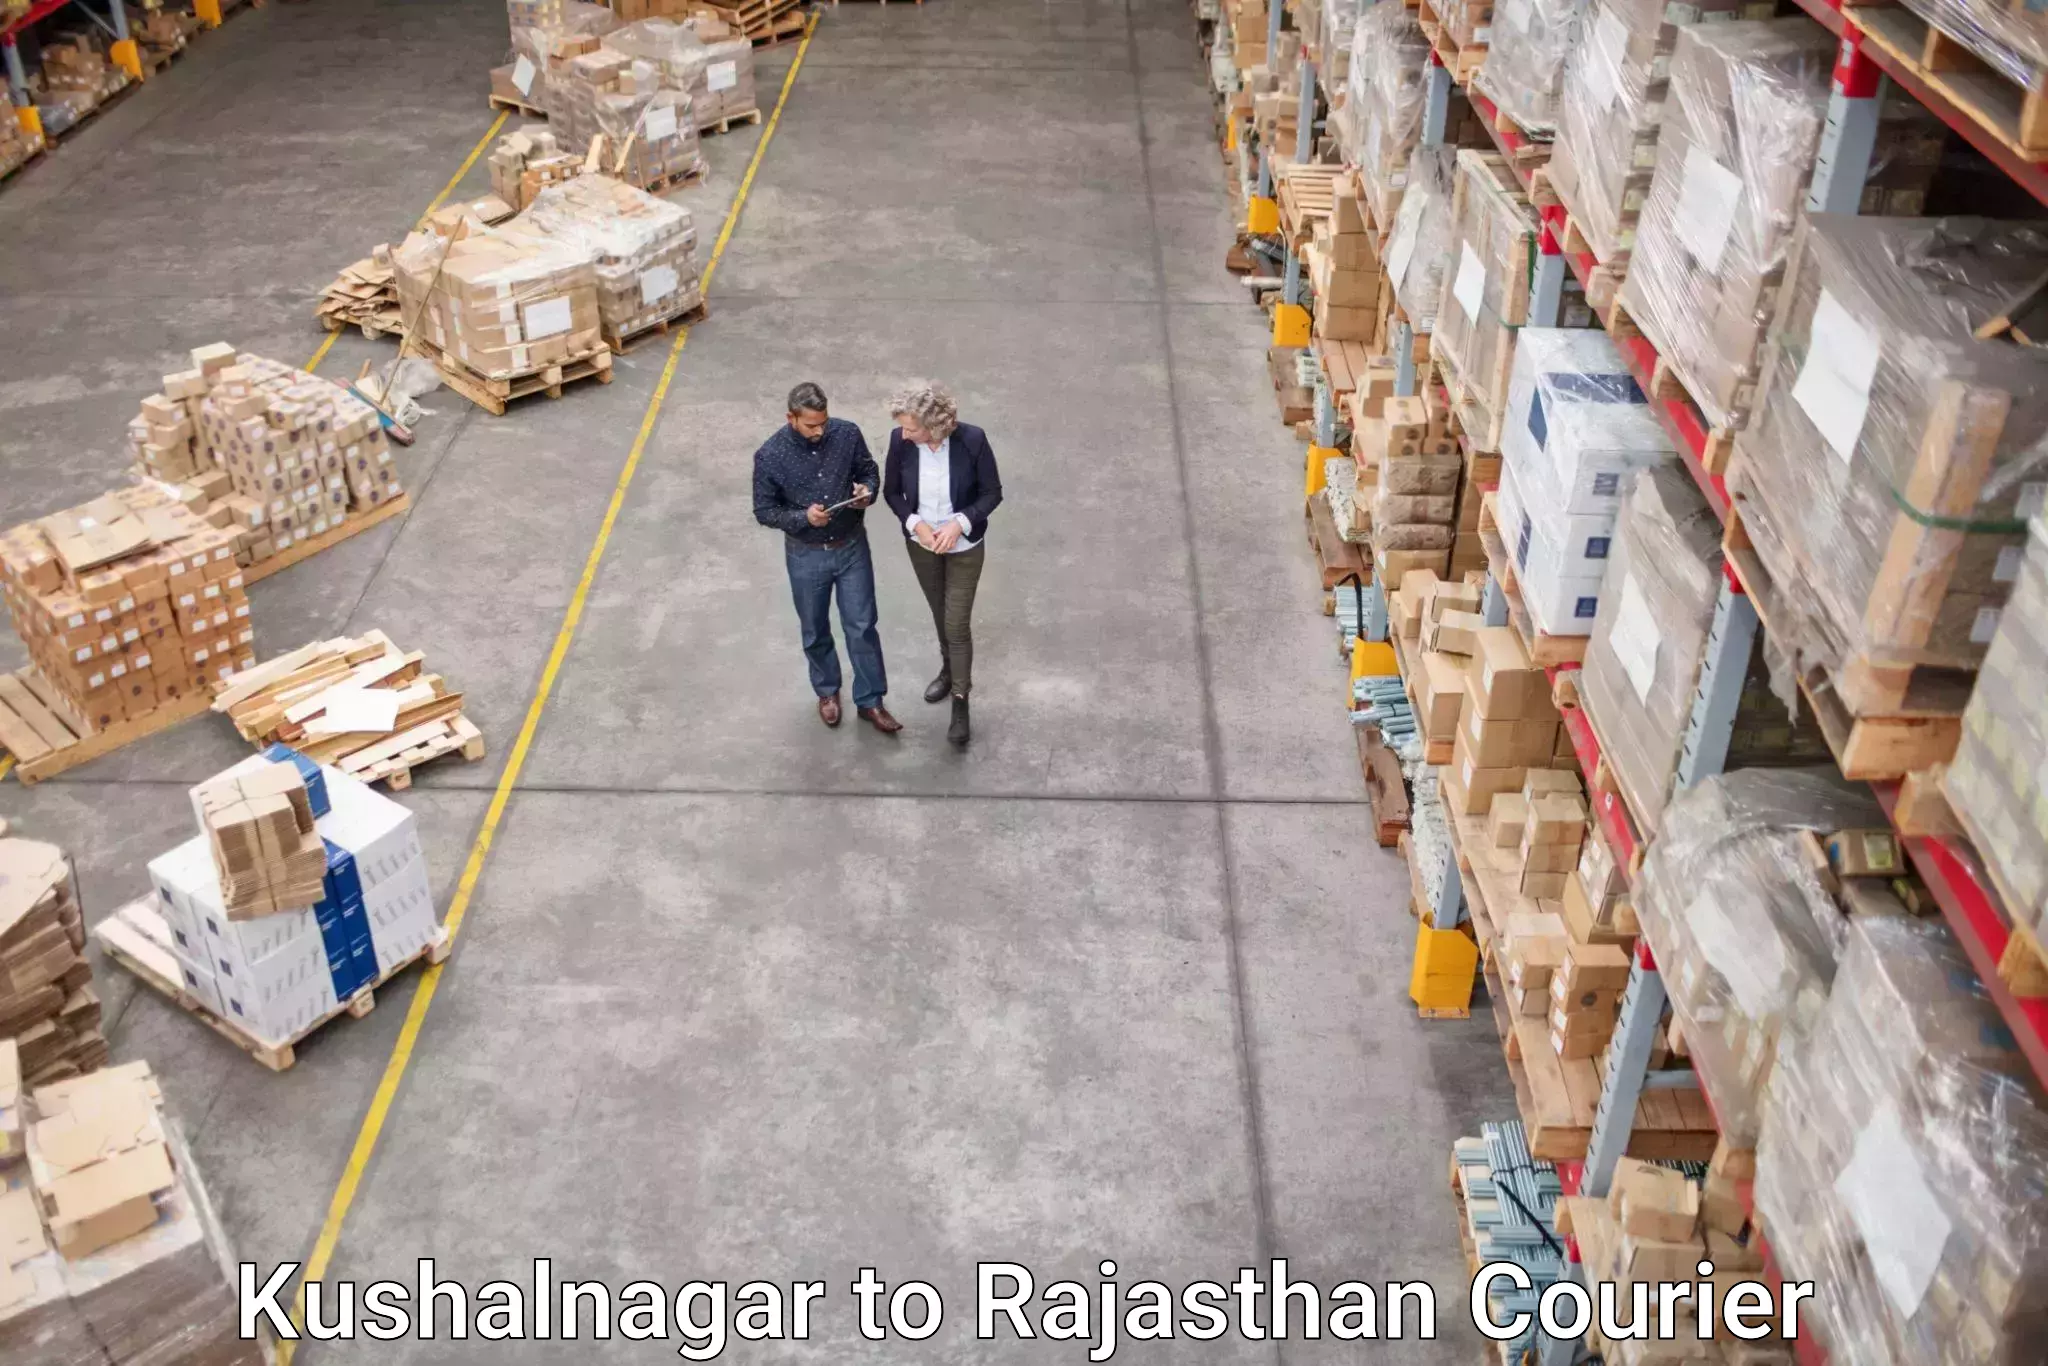 Cargo delivery service Kushalnagar to Pokhran